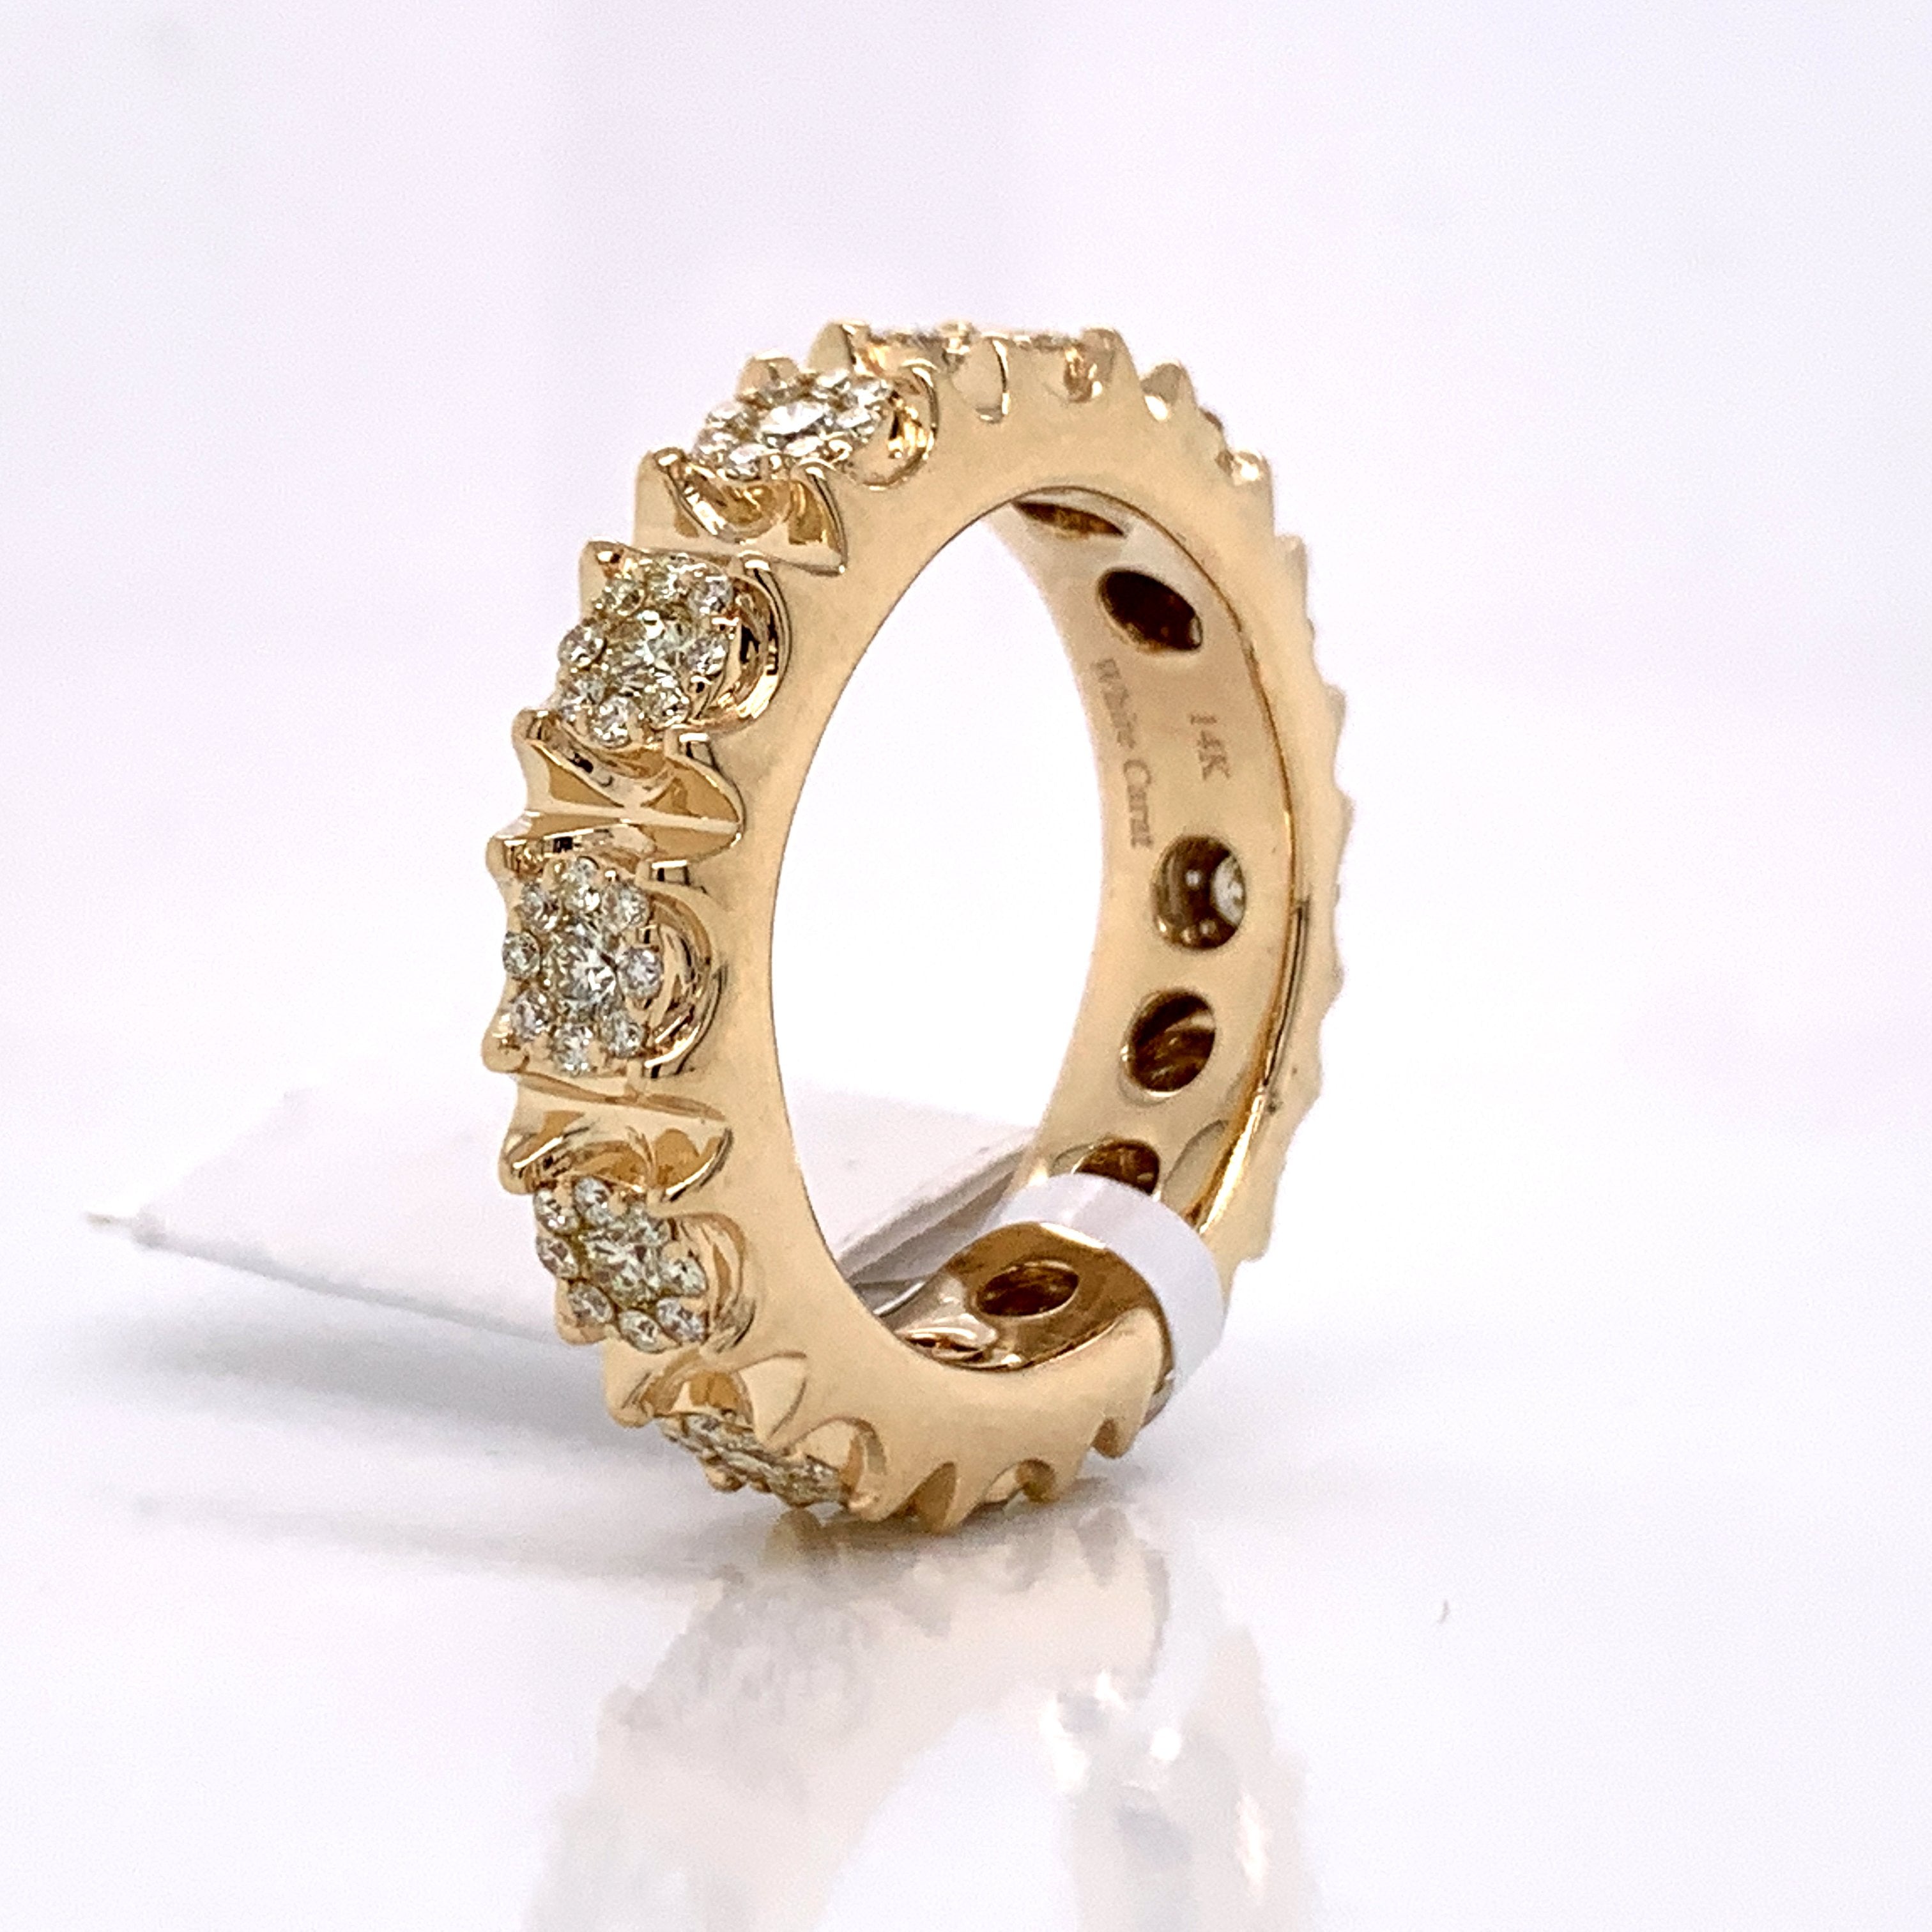 2.00 CT. Diamond Ring in 14K Gold - White Carat Diamonds 